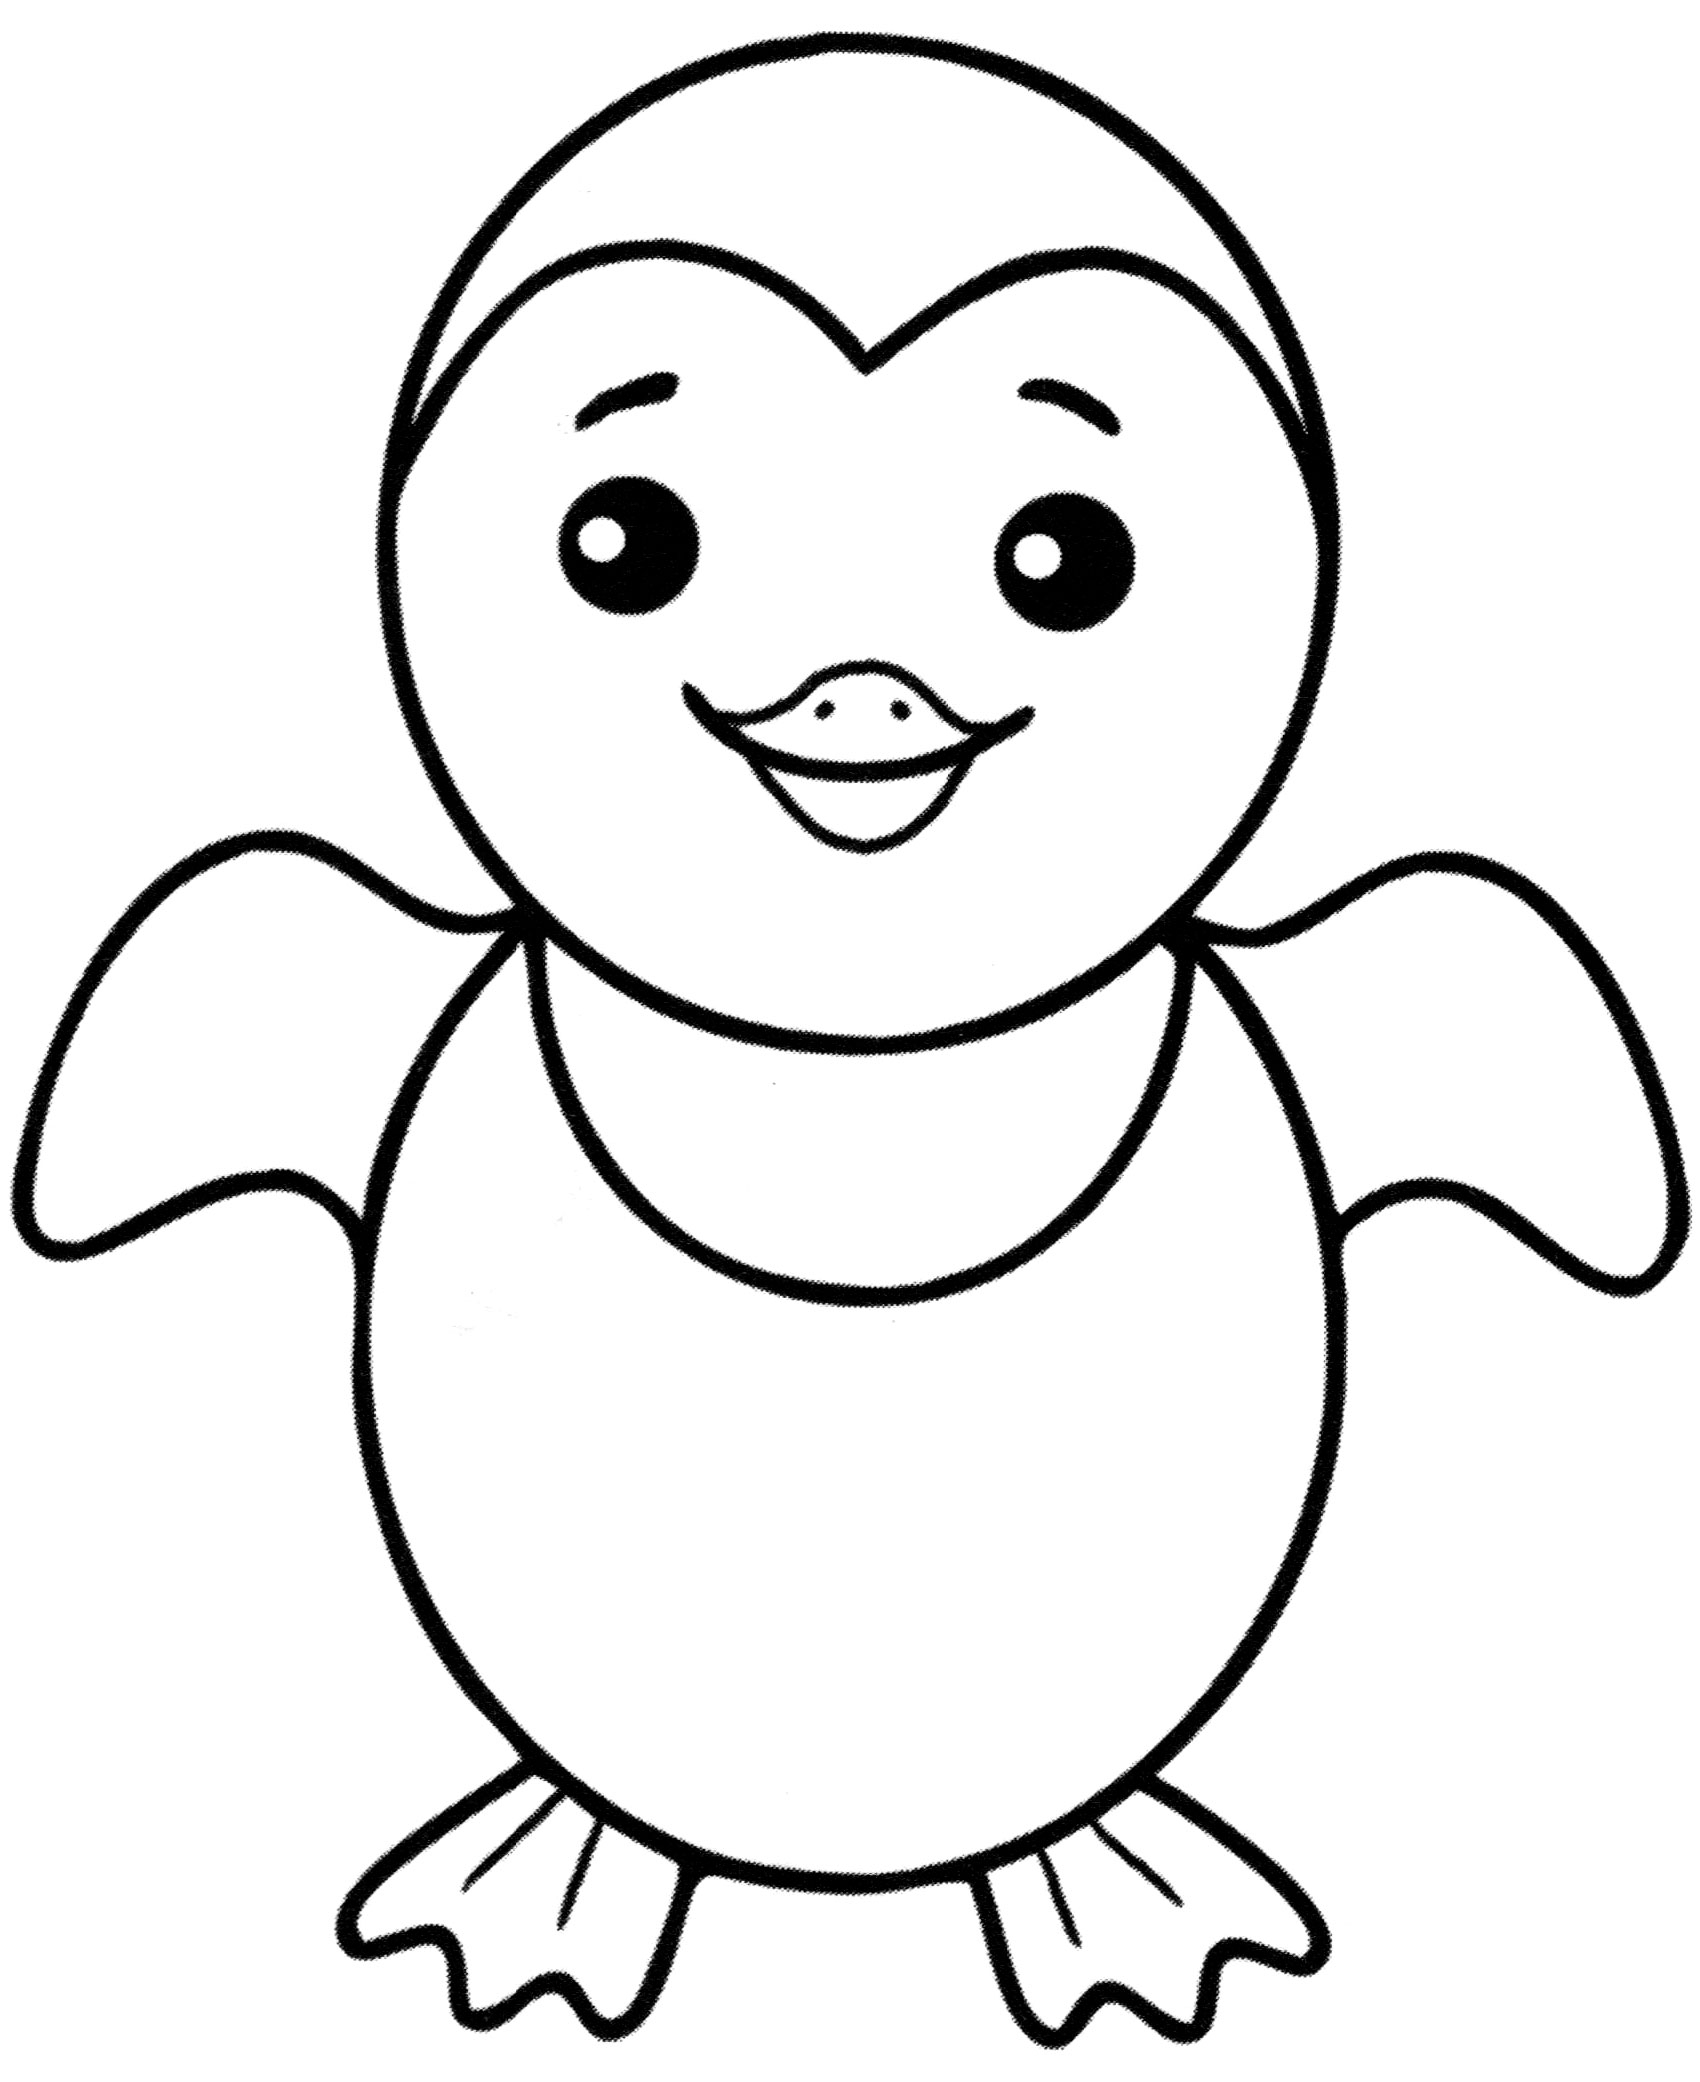 Пингвиненок рисунок